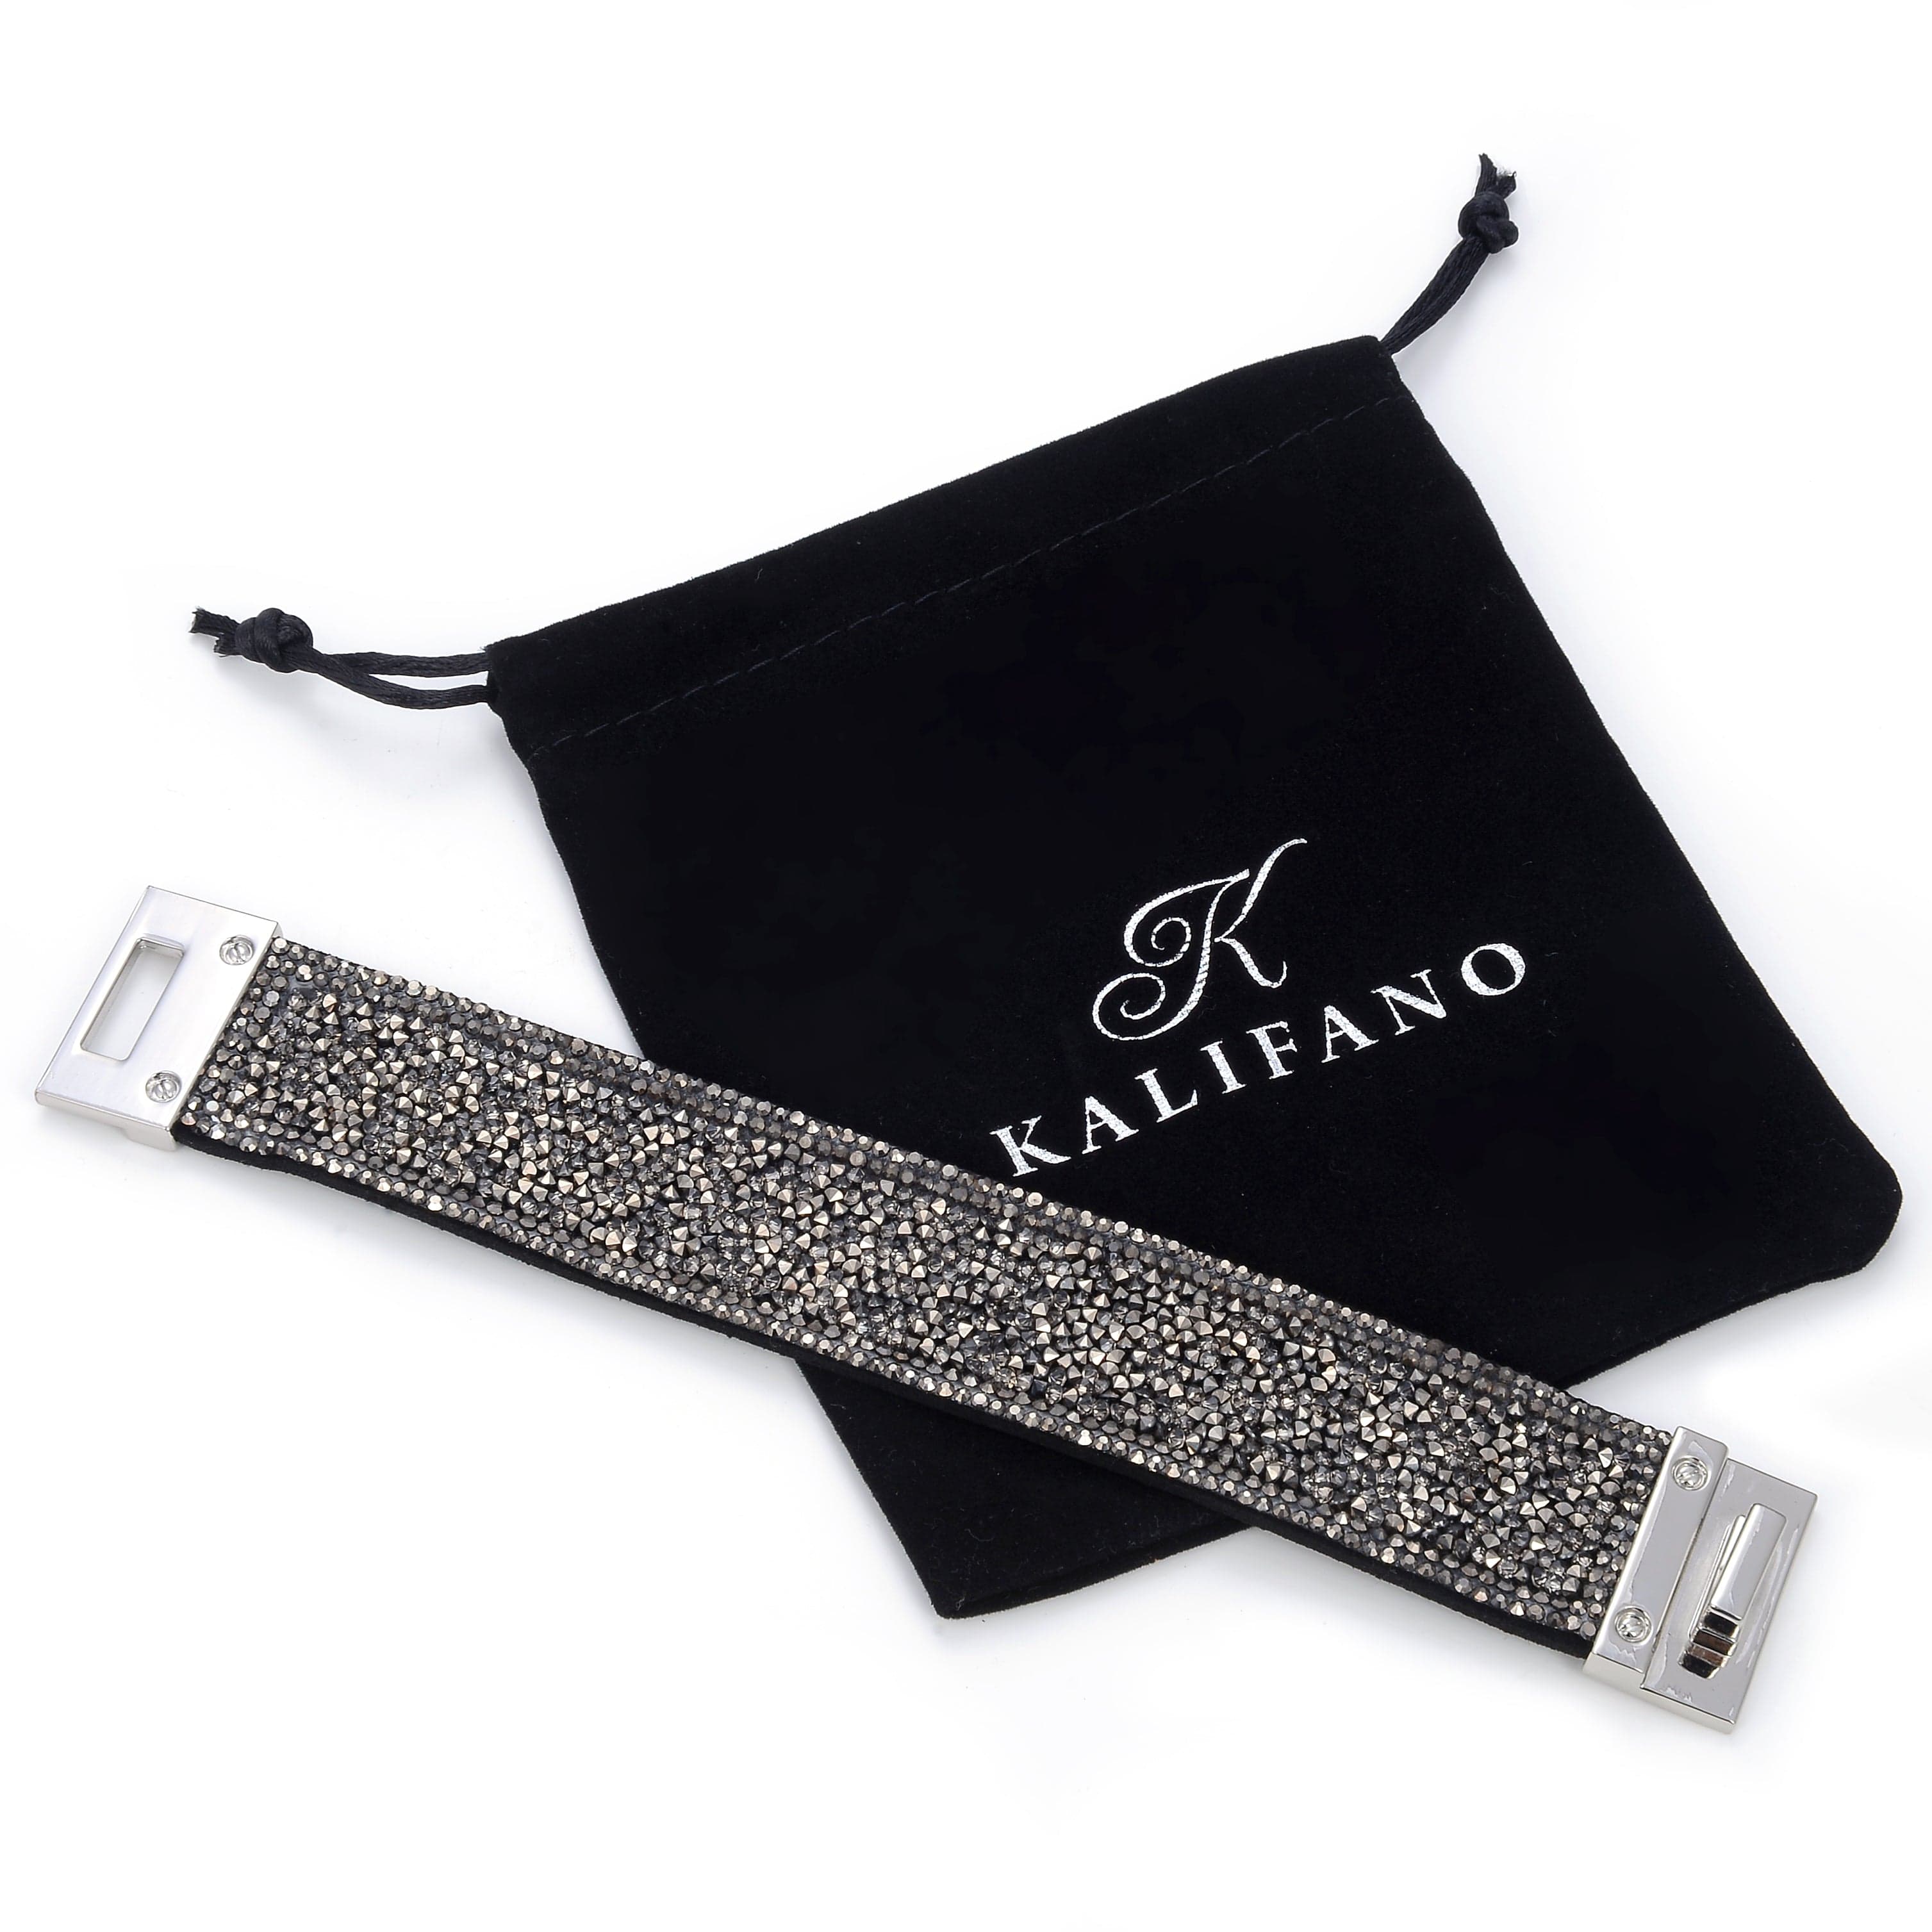 Kalifano Multiwrap Bracelets Short Swarovski Crystal Leather Band Bracelet Gray with Toggle Lock BMW-28-GY